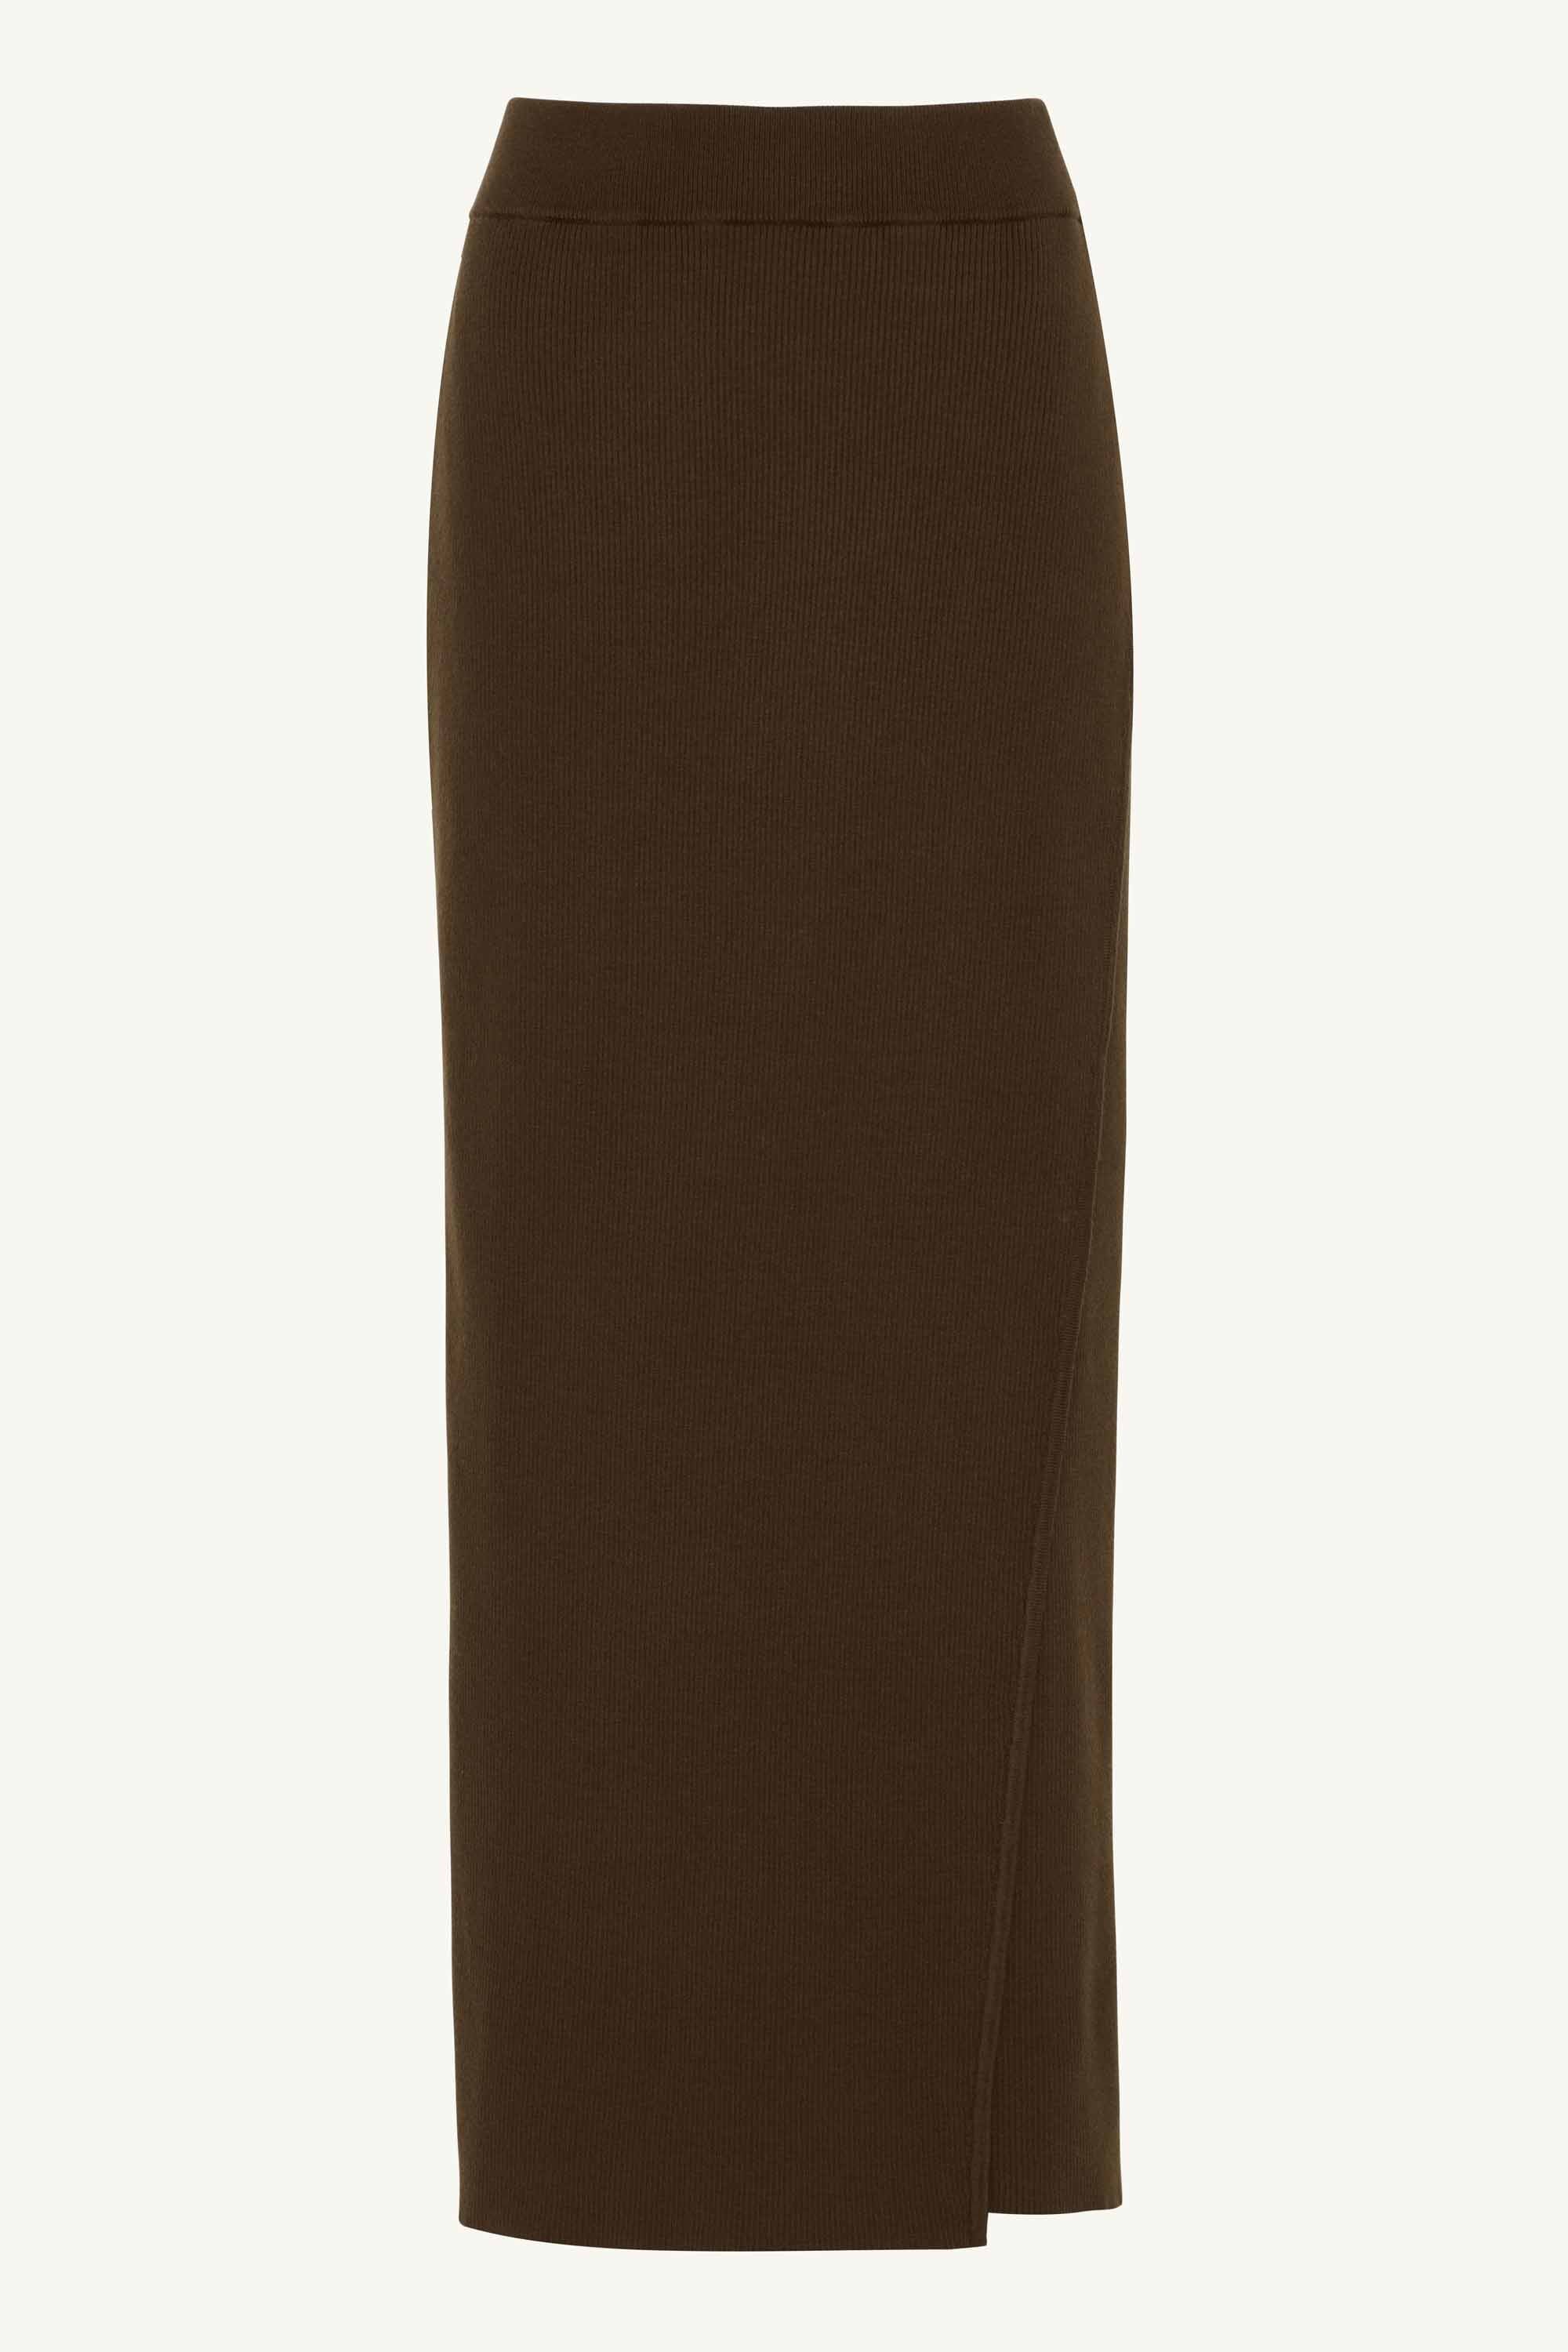 Alara Faux Wrap Knit Maxi Skirt - Chocolate Brown Clothing Veiled 